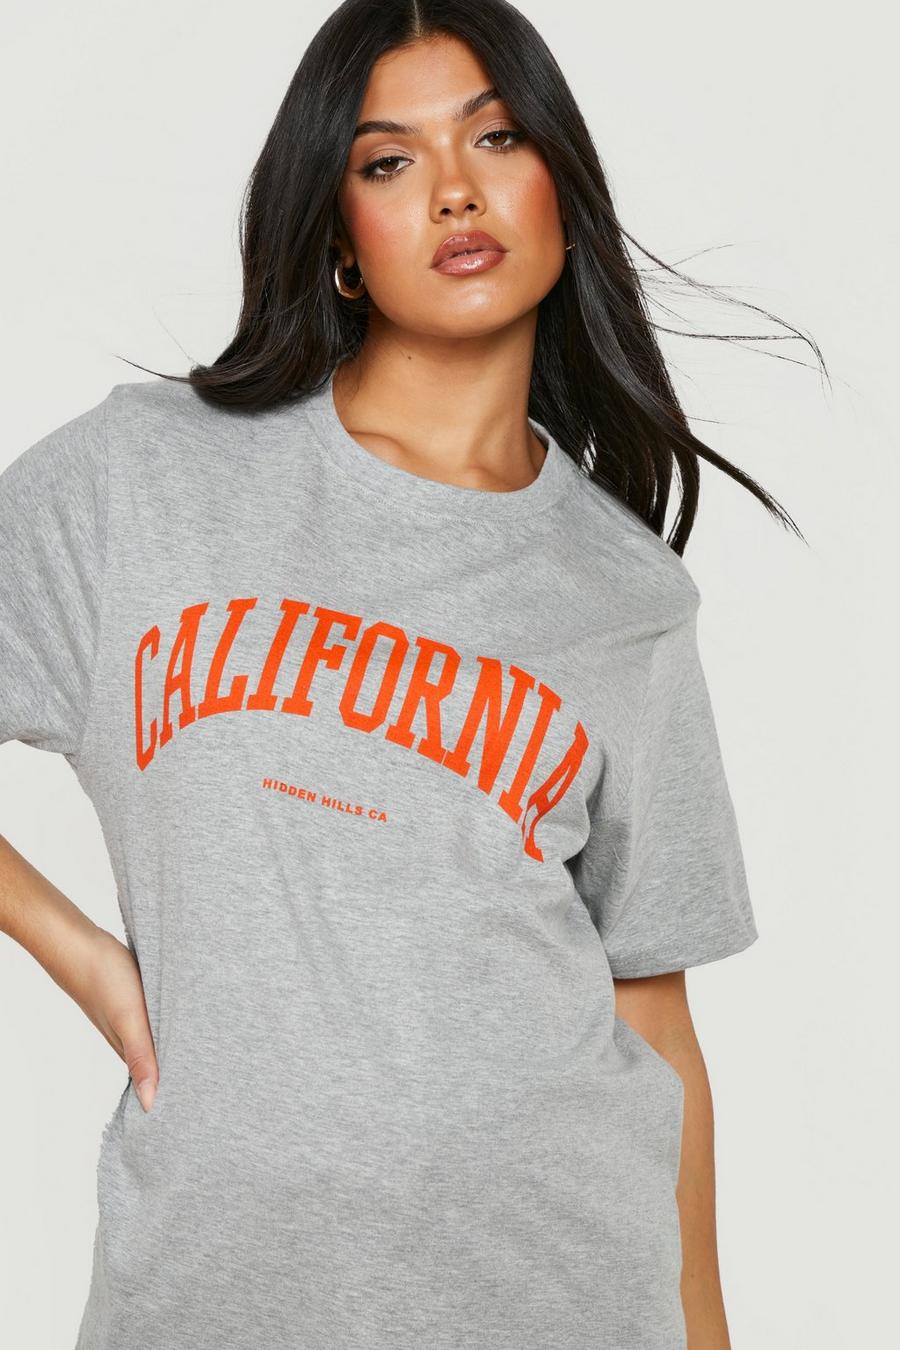 T-shirt Premaman con stampa California davanti, Grey marl grigio